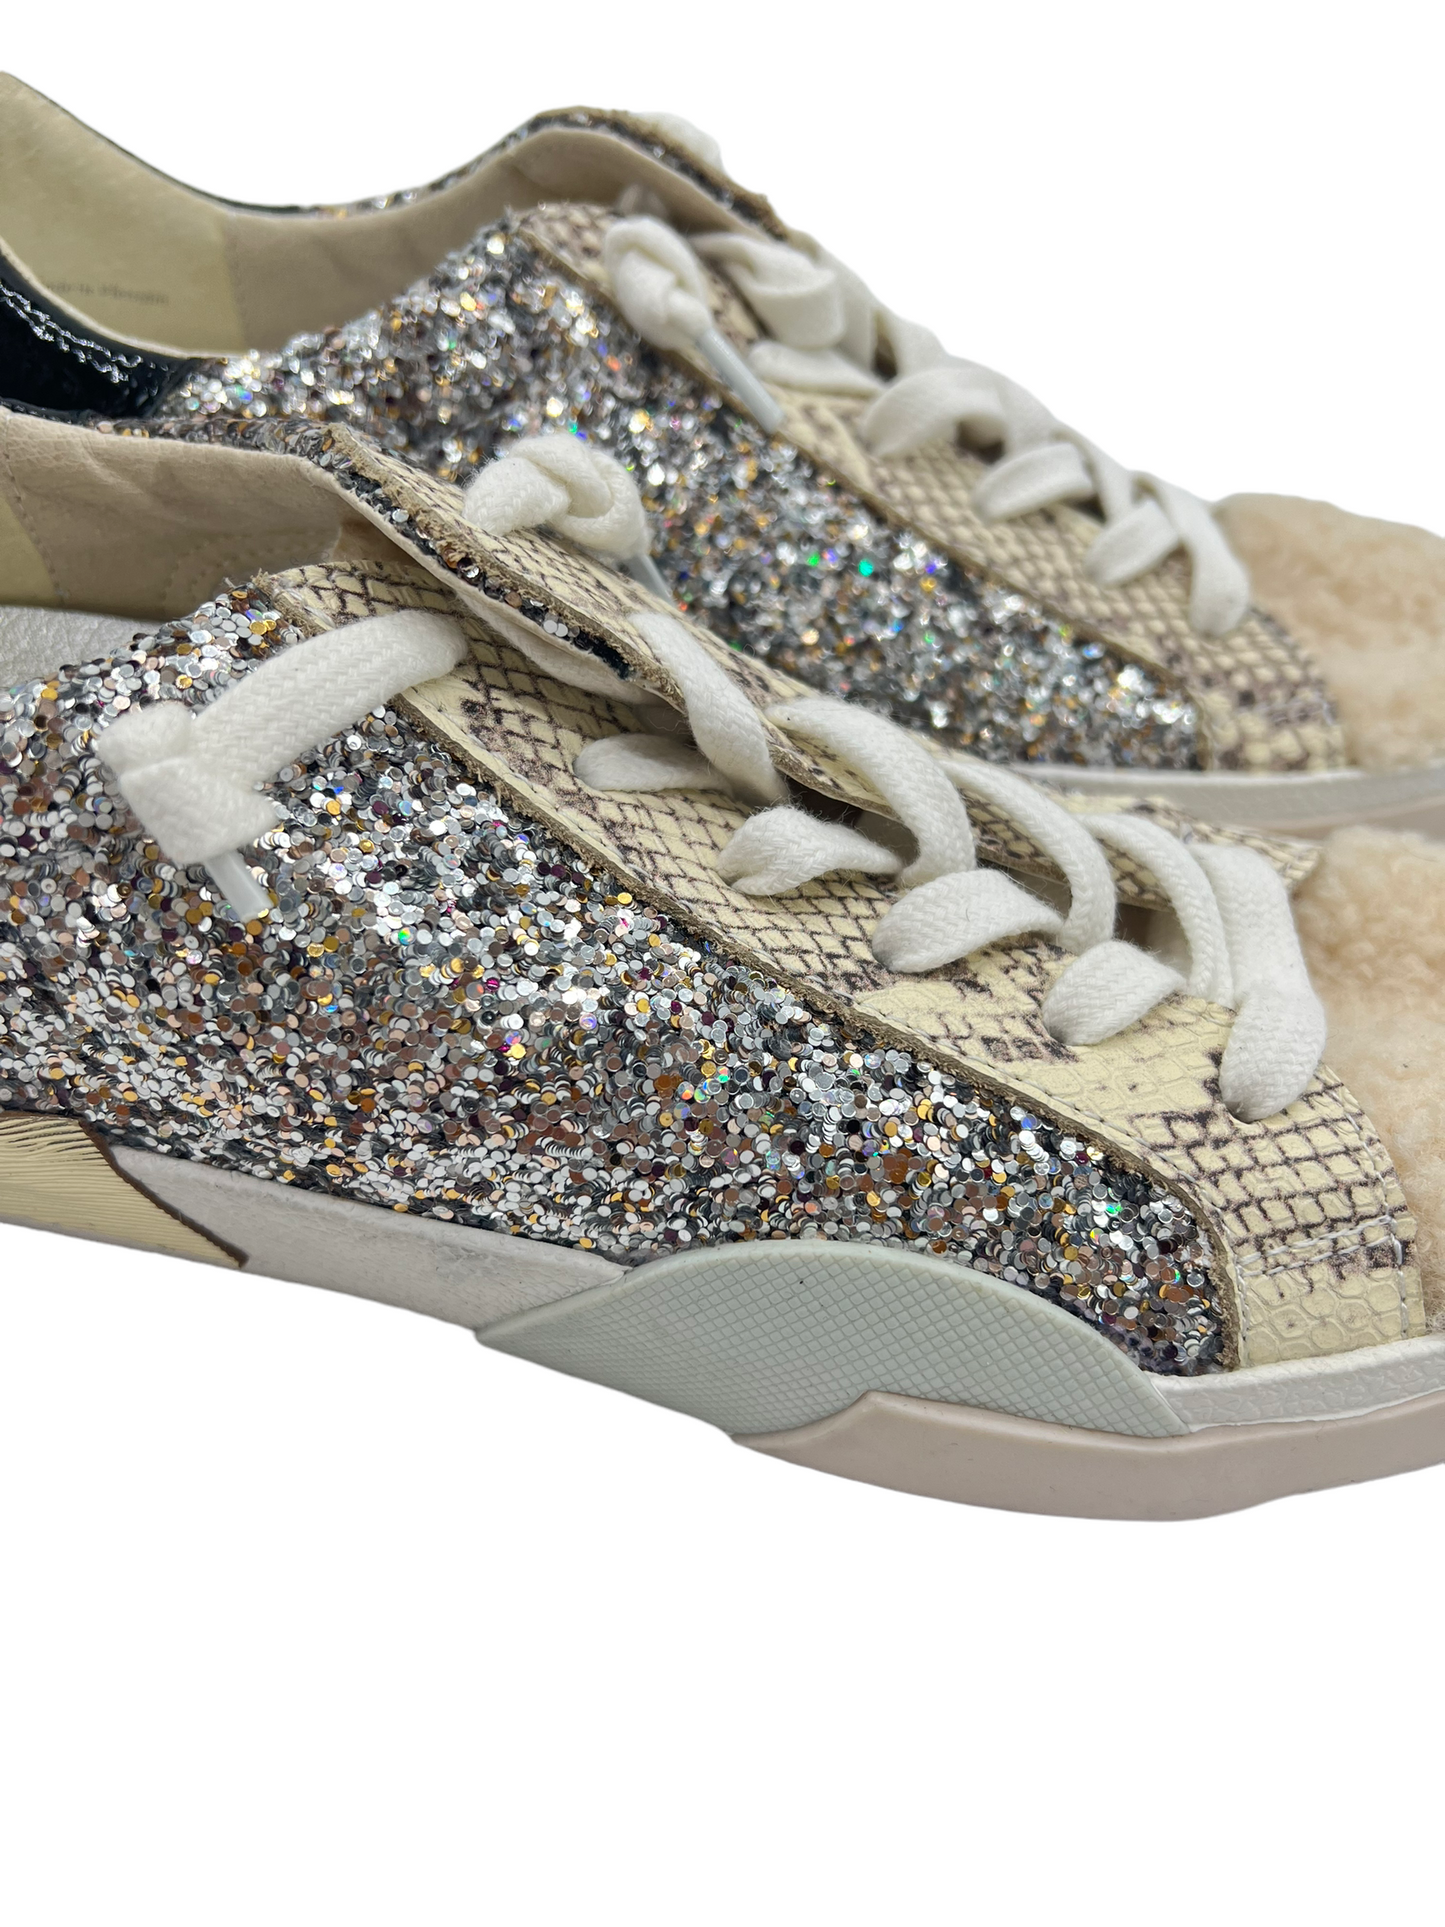 Dolce Vita Zina Glitter Shearling Size 7.5 Sneakers